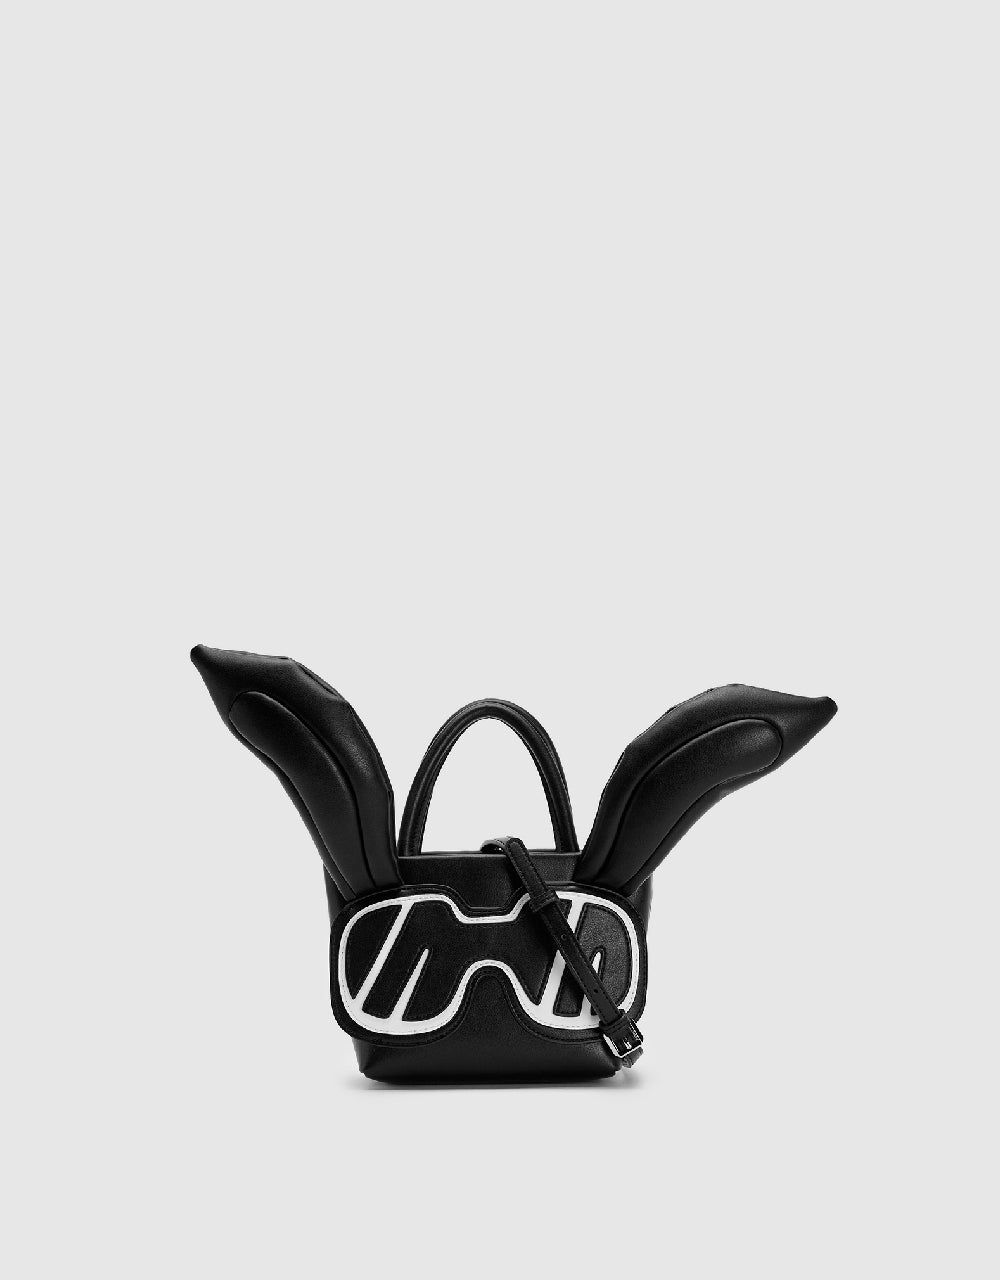 Shoulder Bag With Bunny Ears